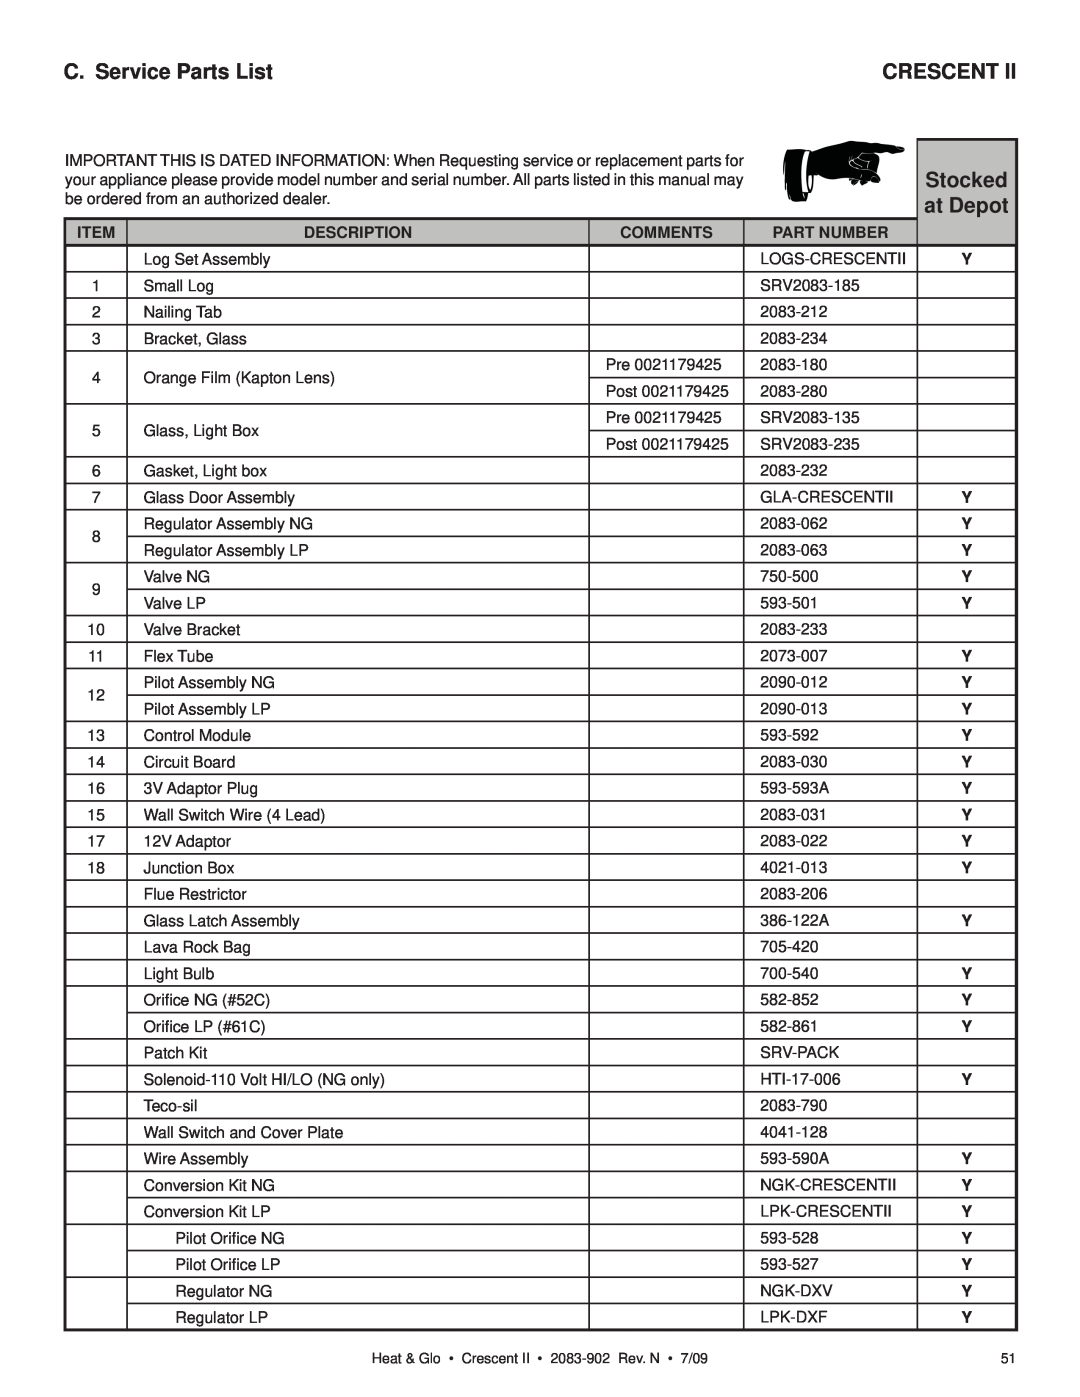 Heat & Glo LifeStyle CRESCENT II C. Service Parts List, Stocked, at Depot, Crescent, Description, Comments, Part Number 